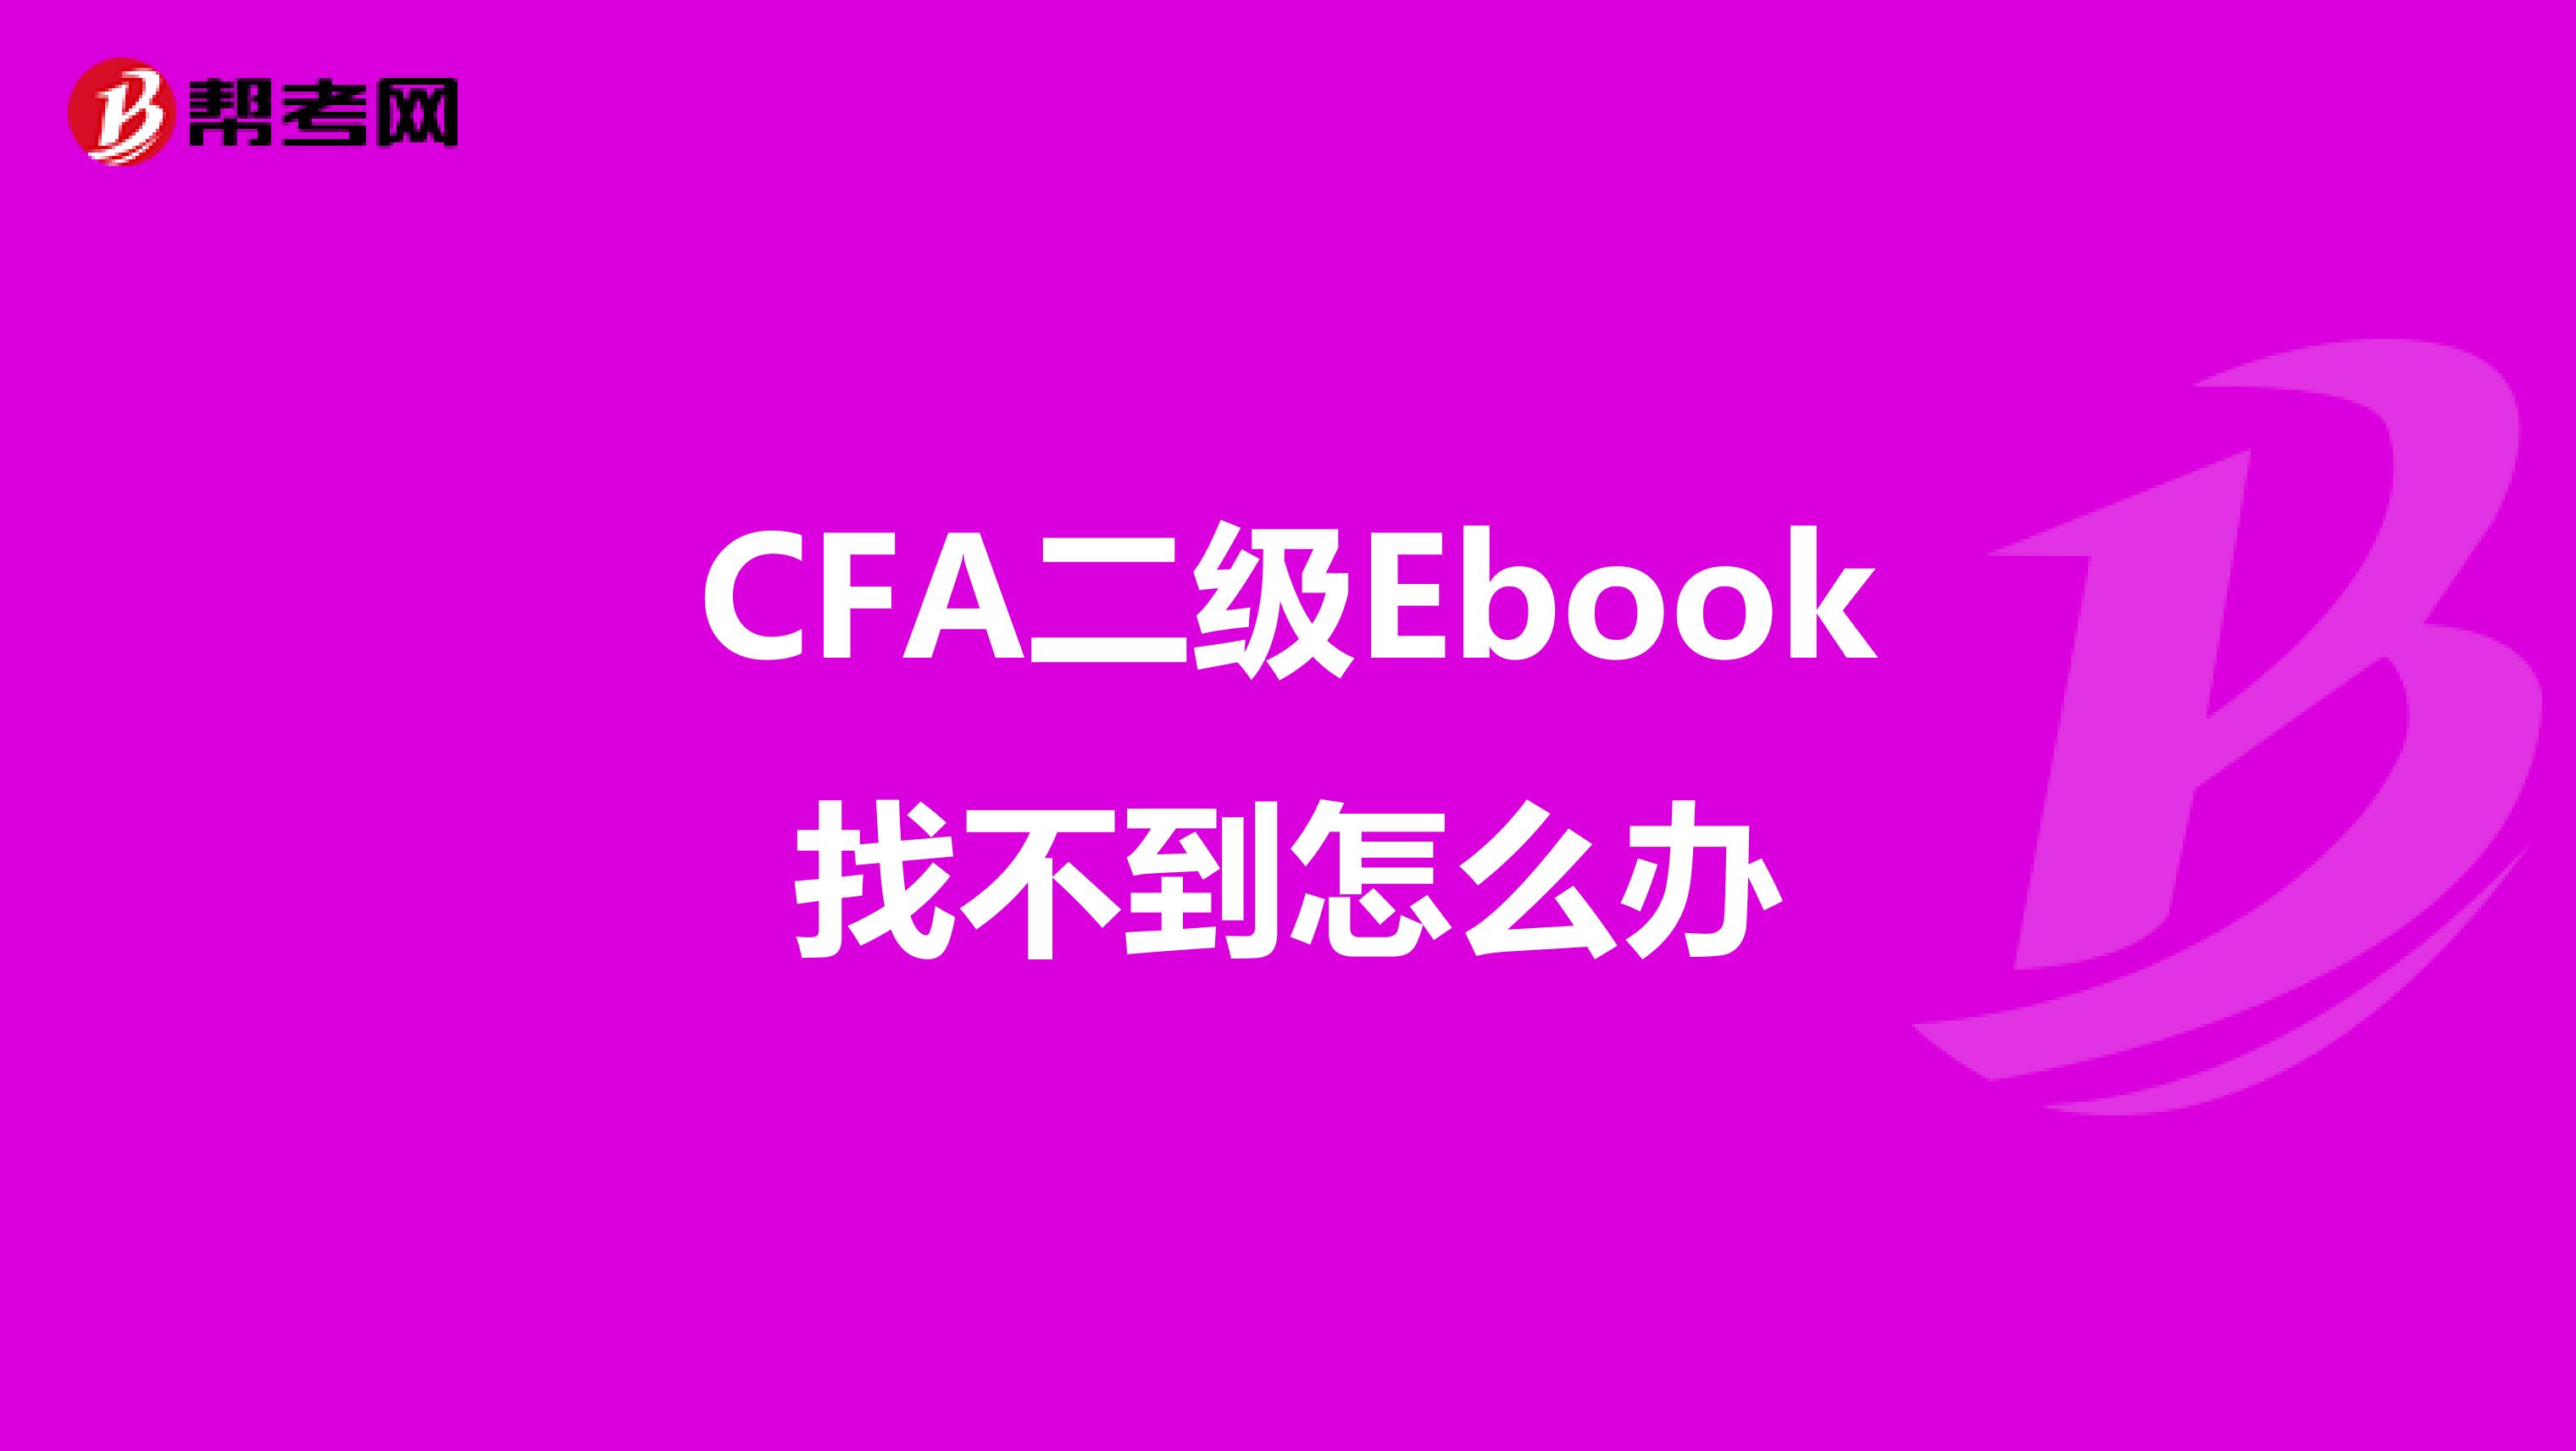 CFA二级Ebook找不到怎么办